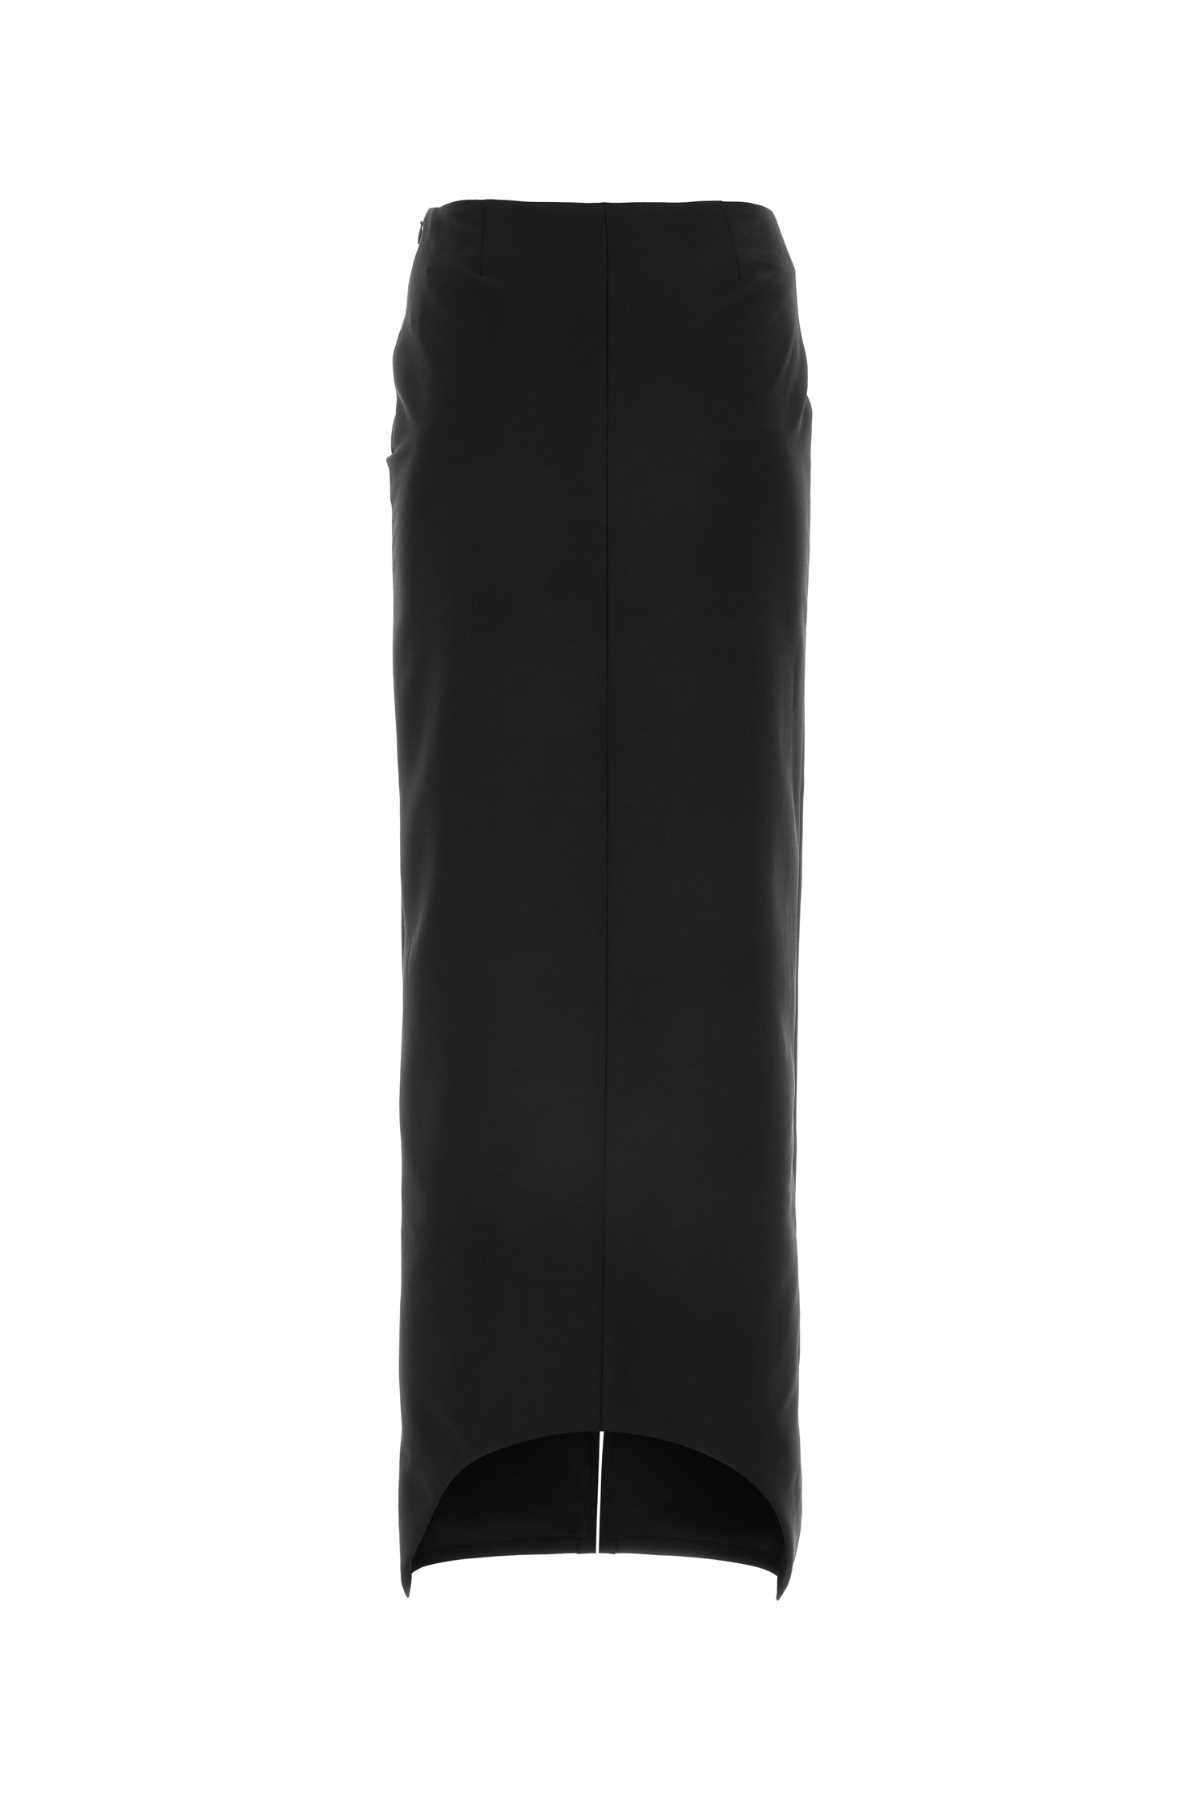 Shop Givenchy Black Wool Blend Skirt